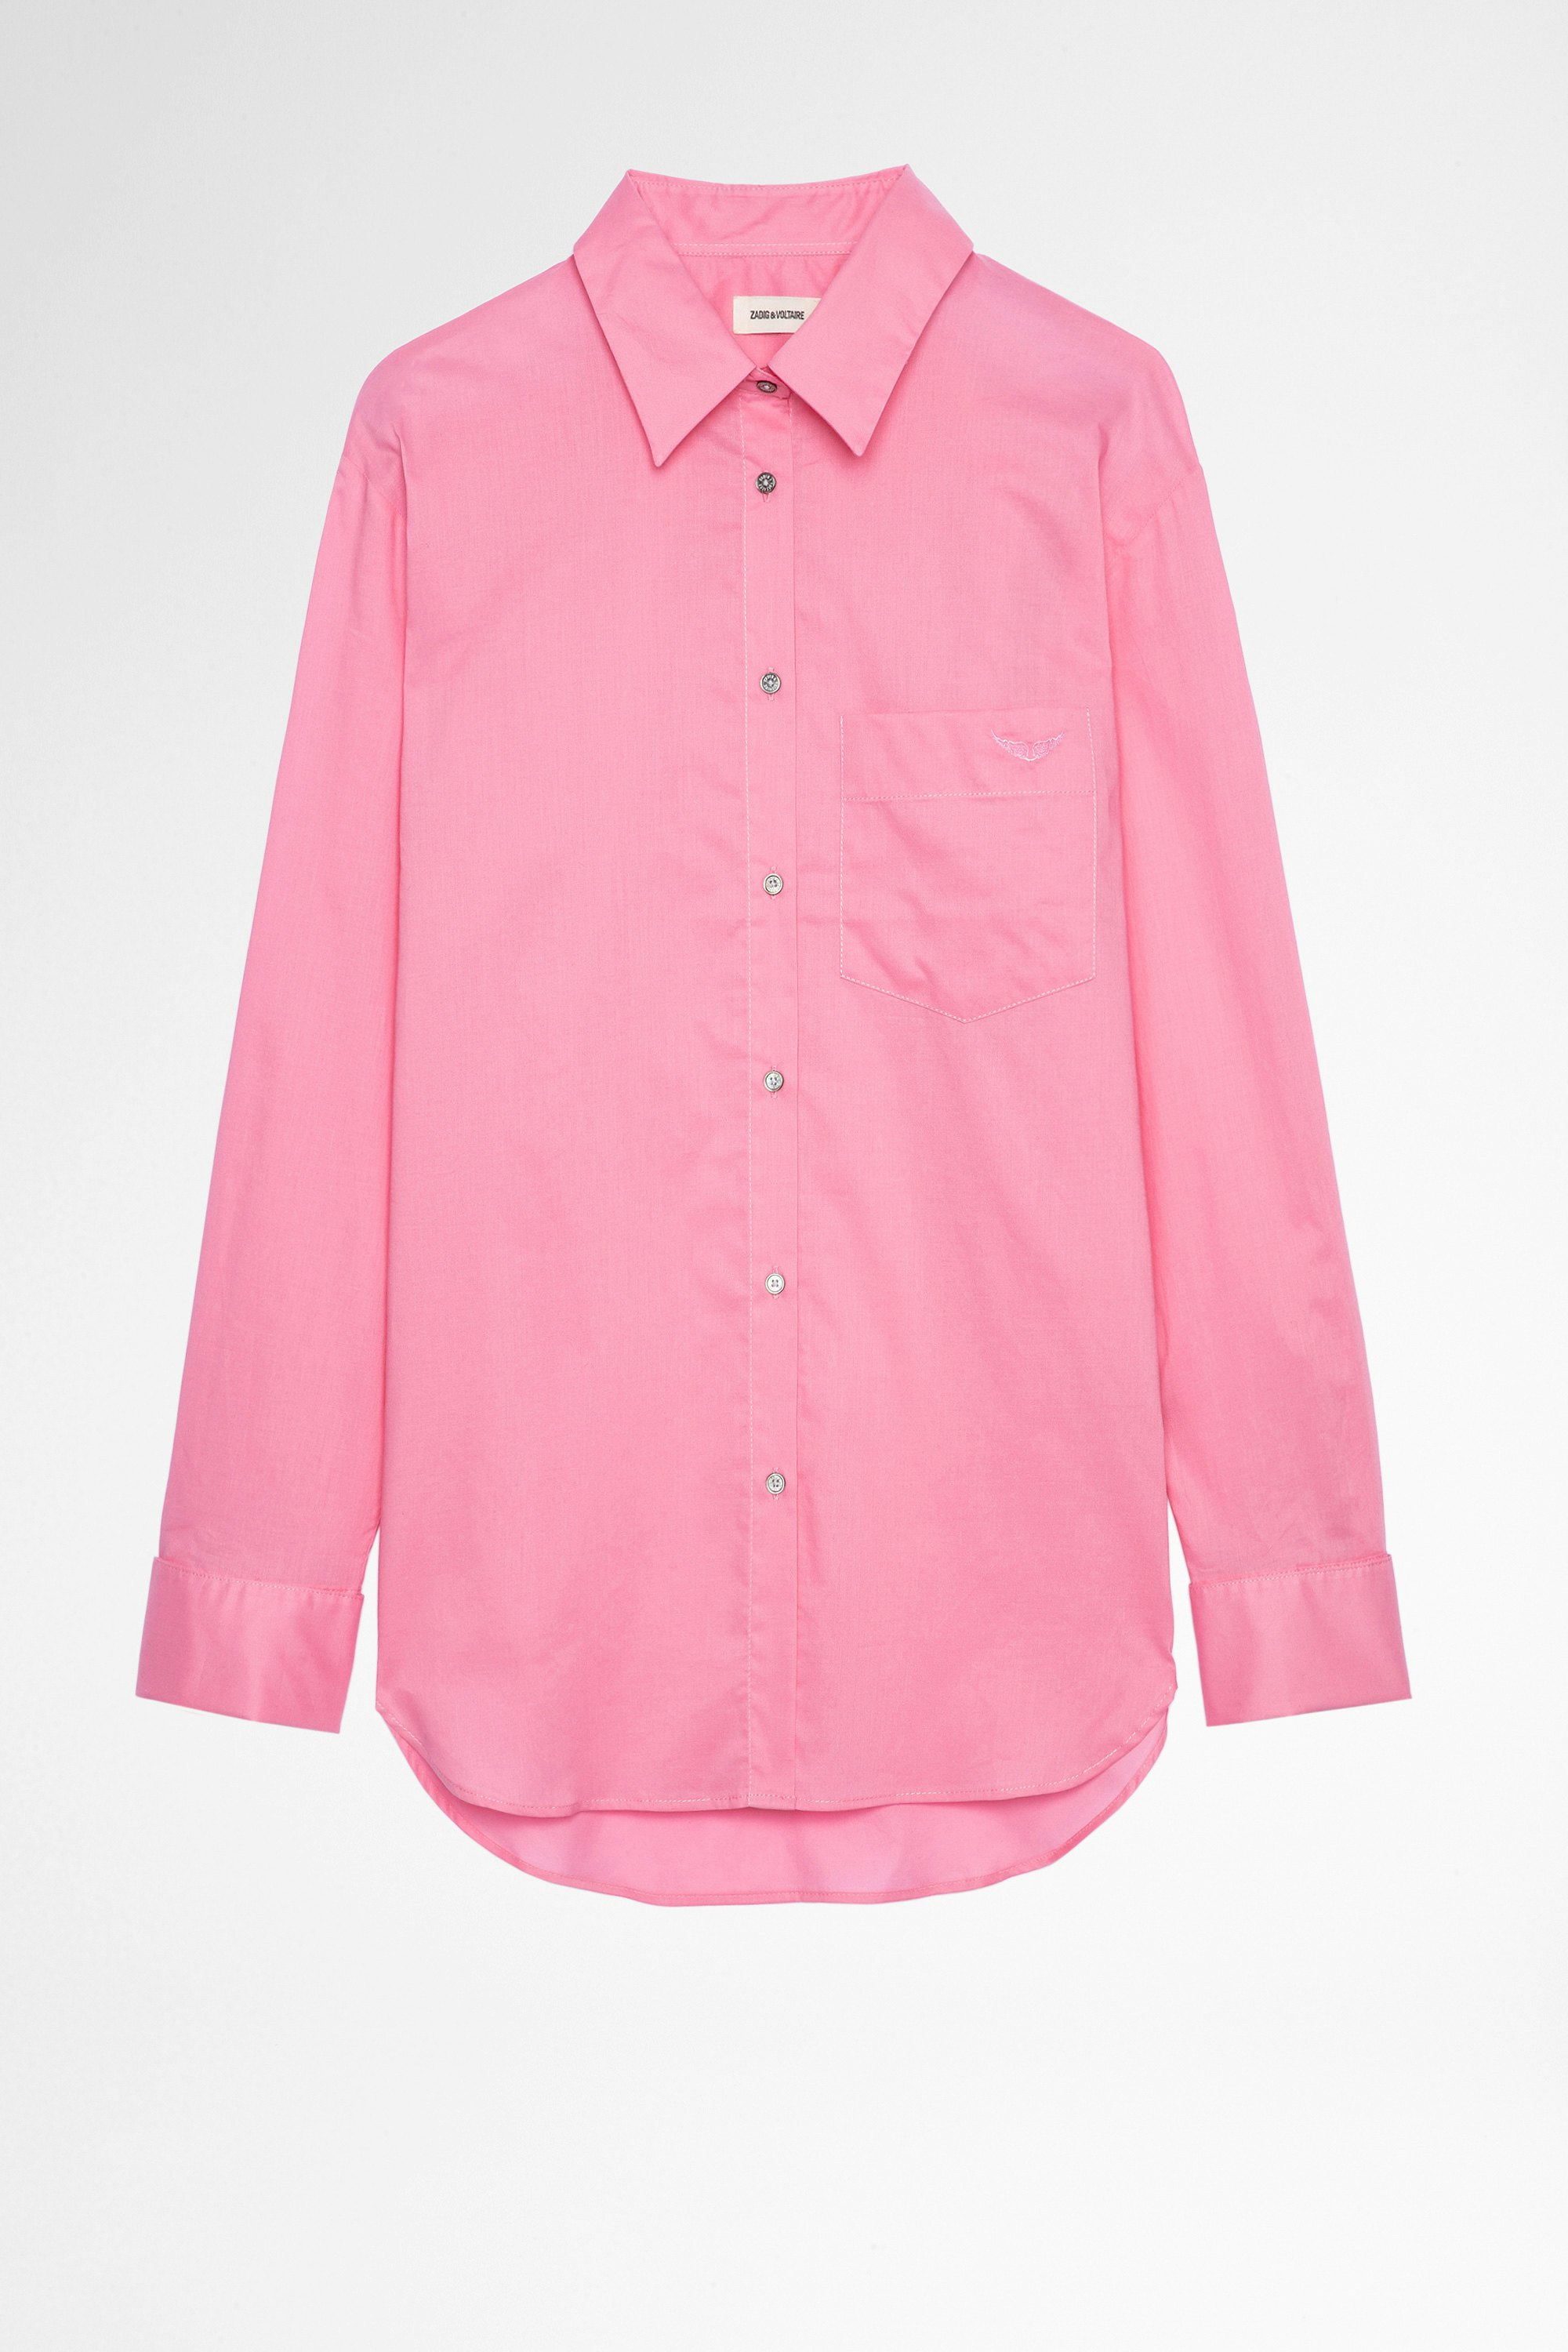 Morning Shirt Women’s pink cotton shirt. Made with fibers from organic farming.